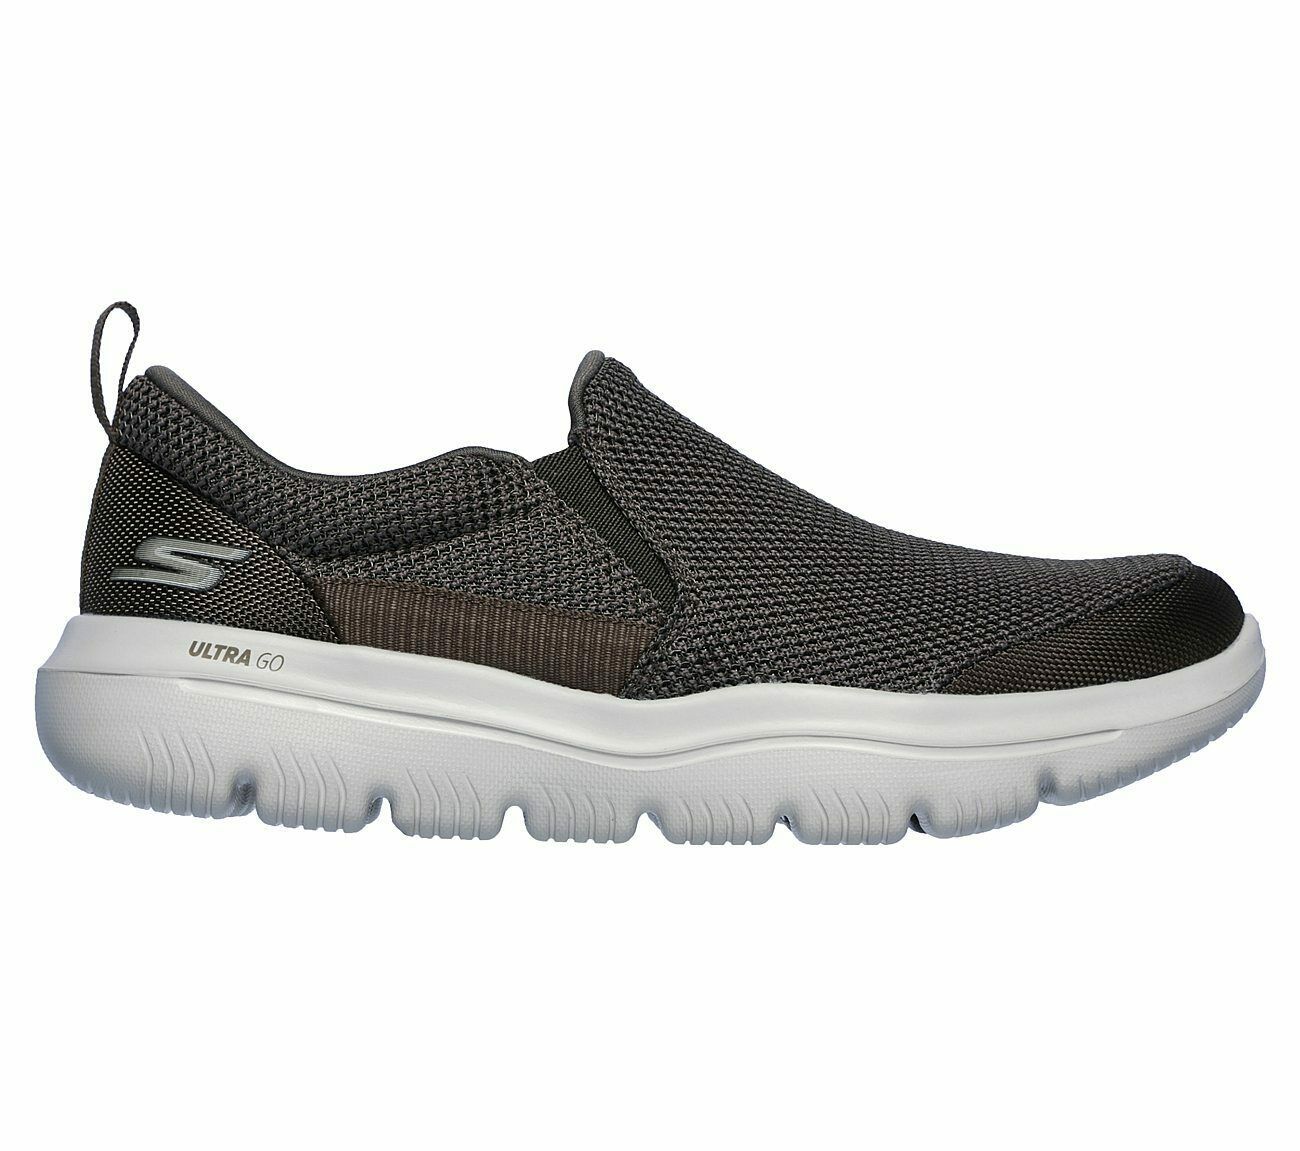 Skechers Khaki shoes Men Comfort Soft Slipon Casual Gowalk Evolution ...